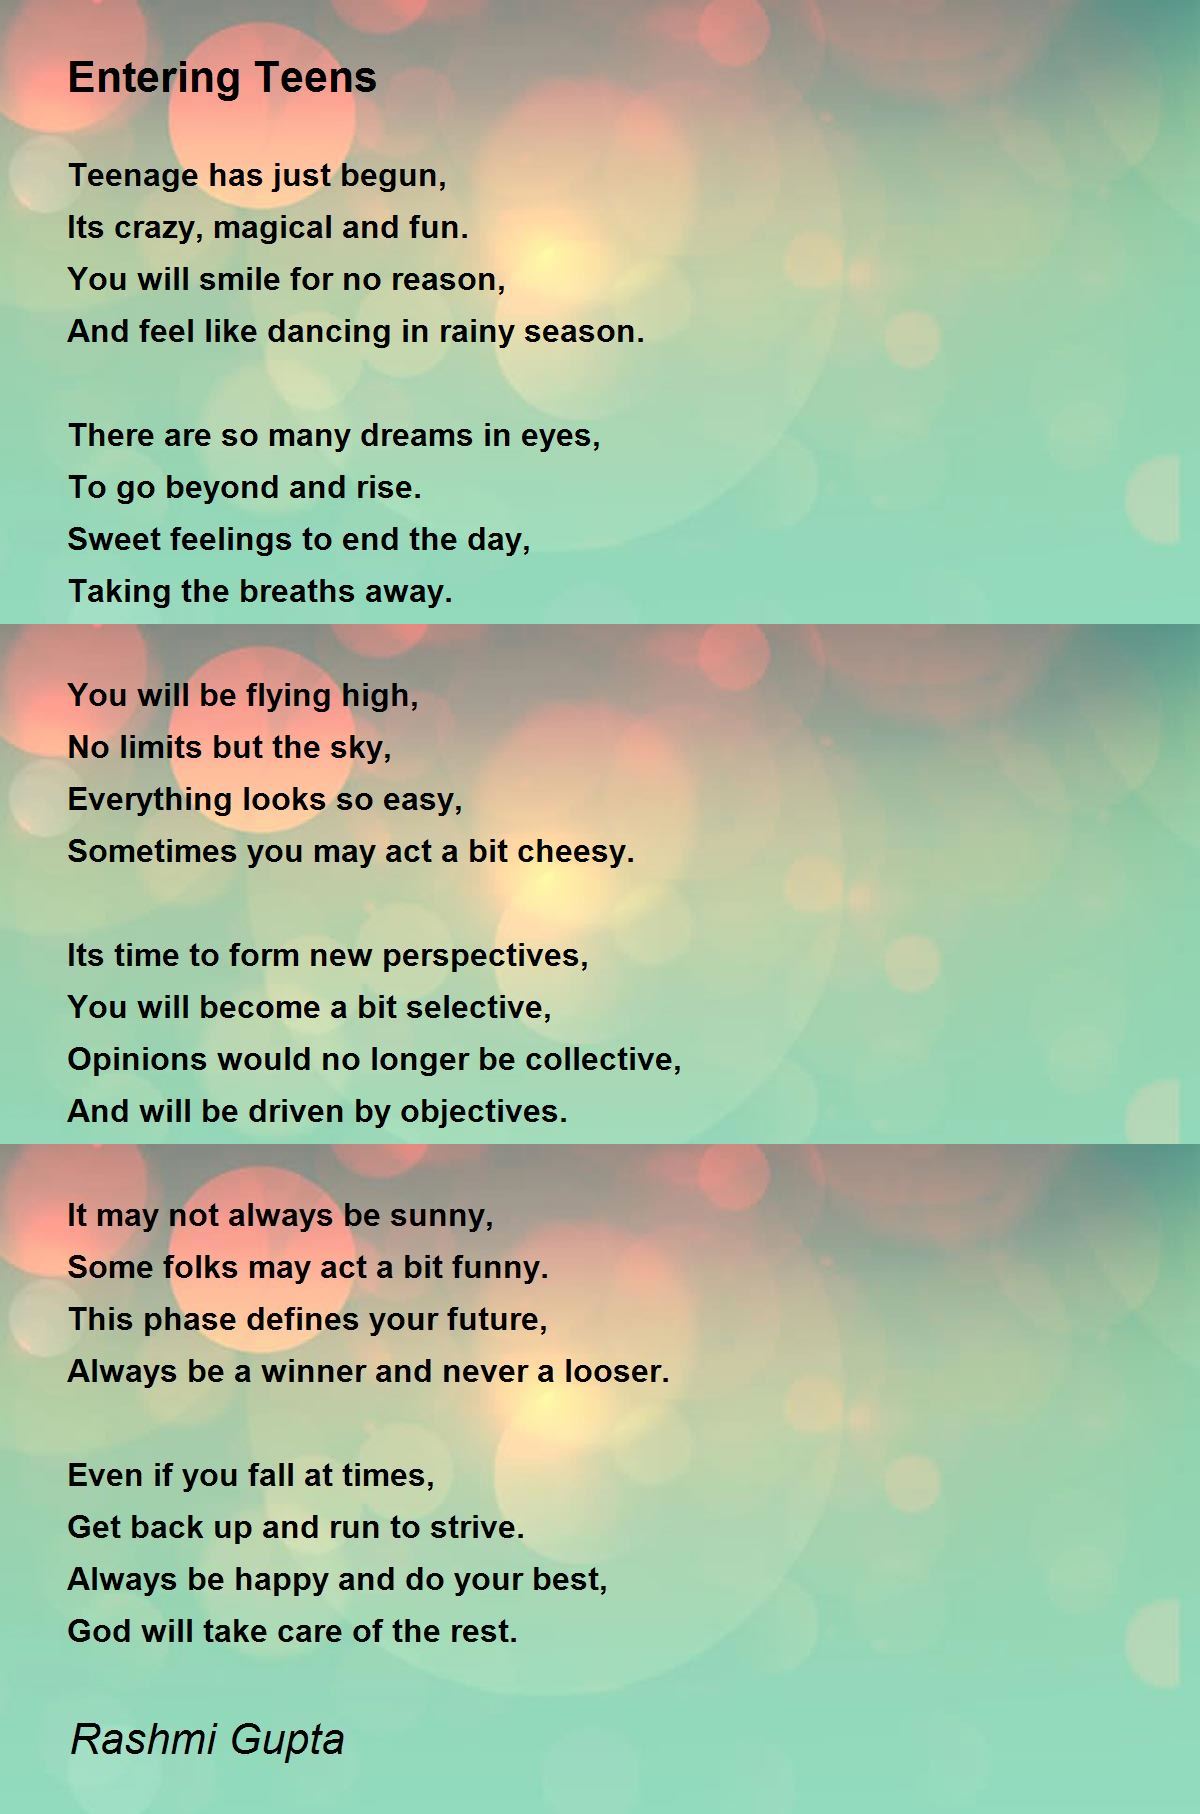 Entering Teens - Entering Teens Poem by Rashmi Gupta